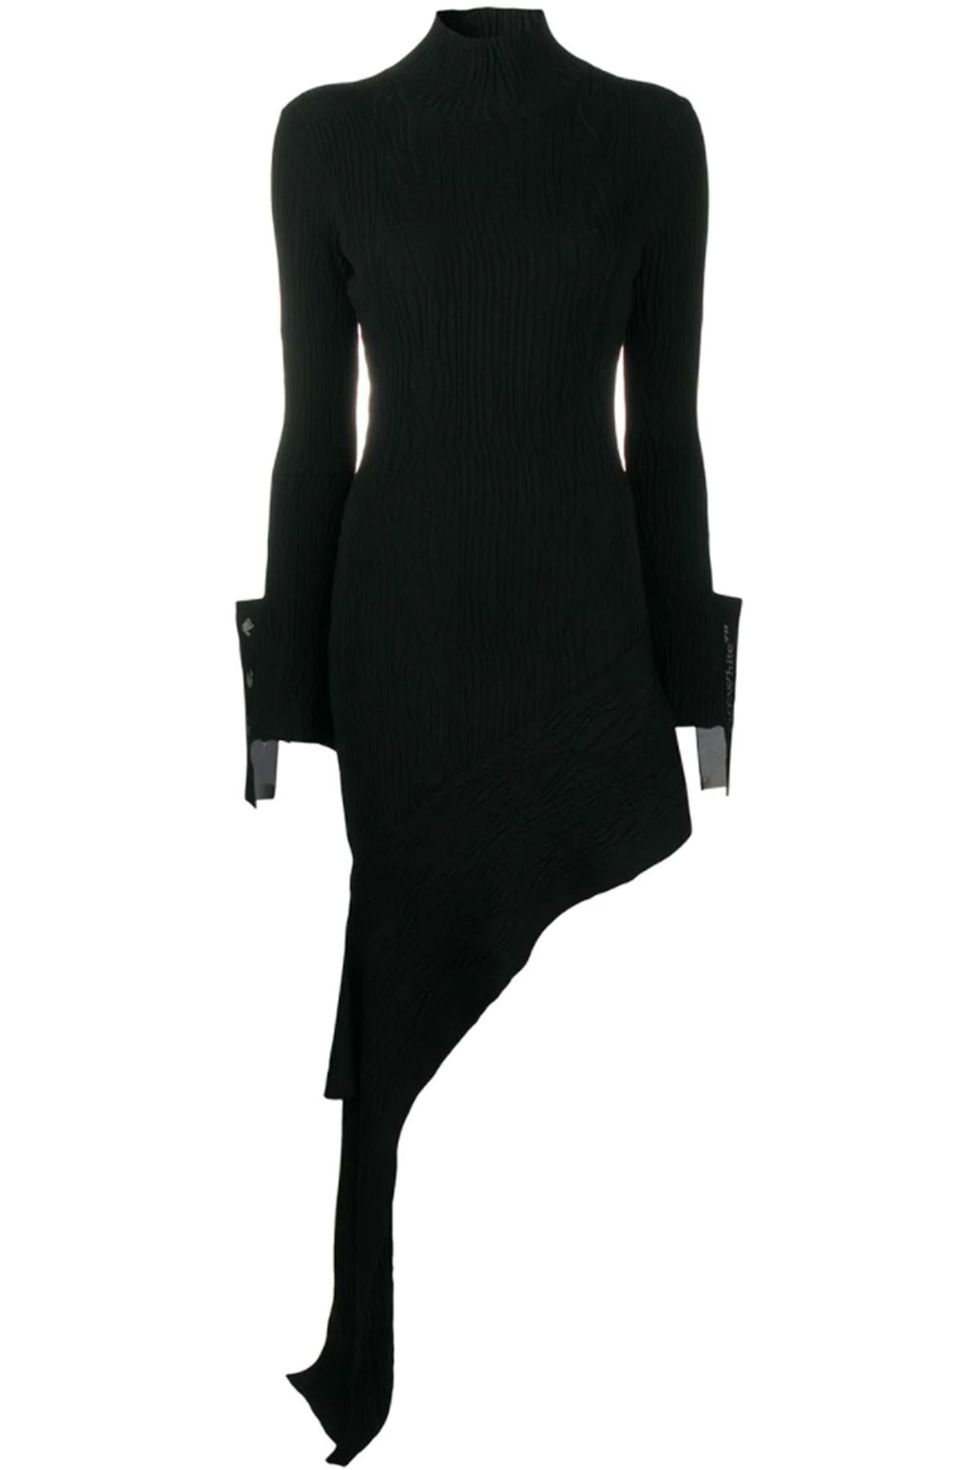 17 Stylish Little Black Dresses to Wear 2021- Perfect Little Black ...